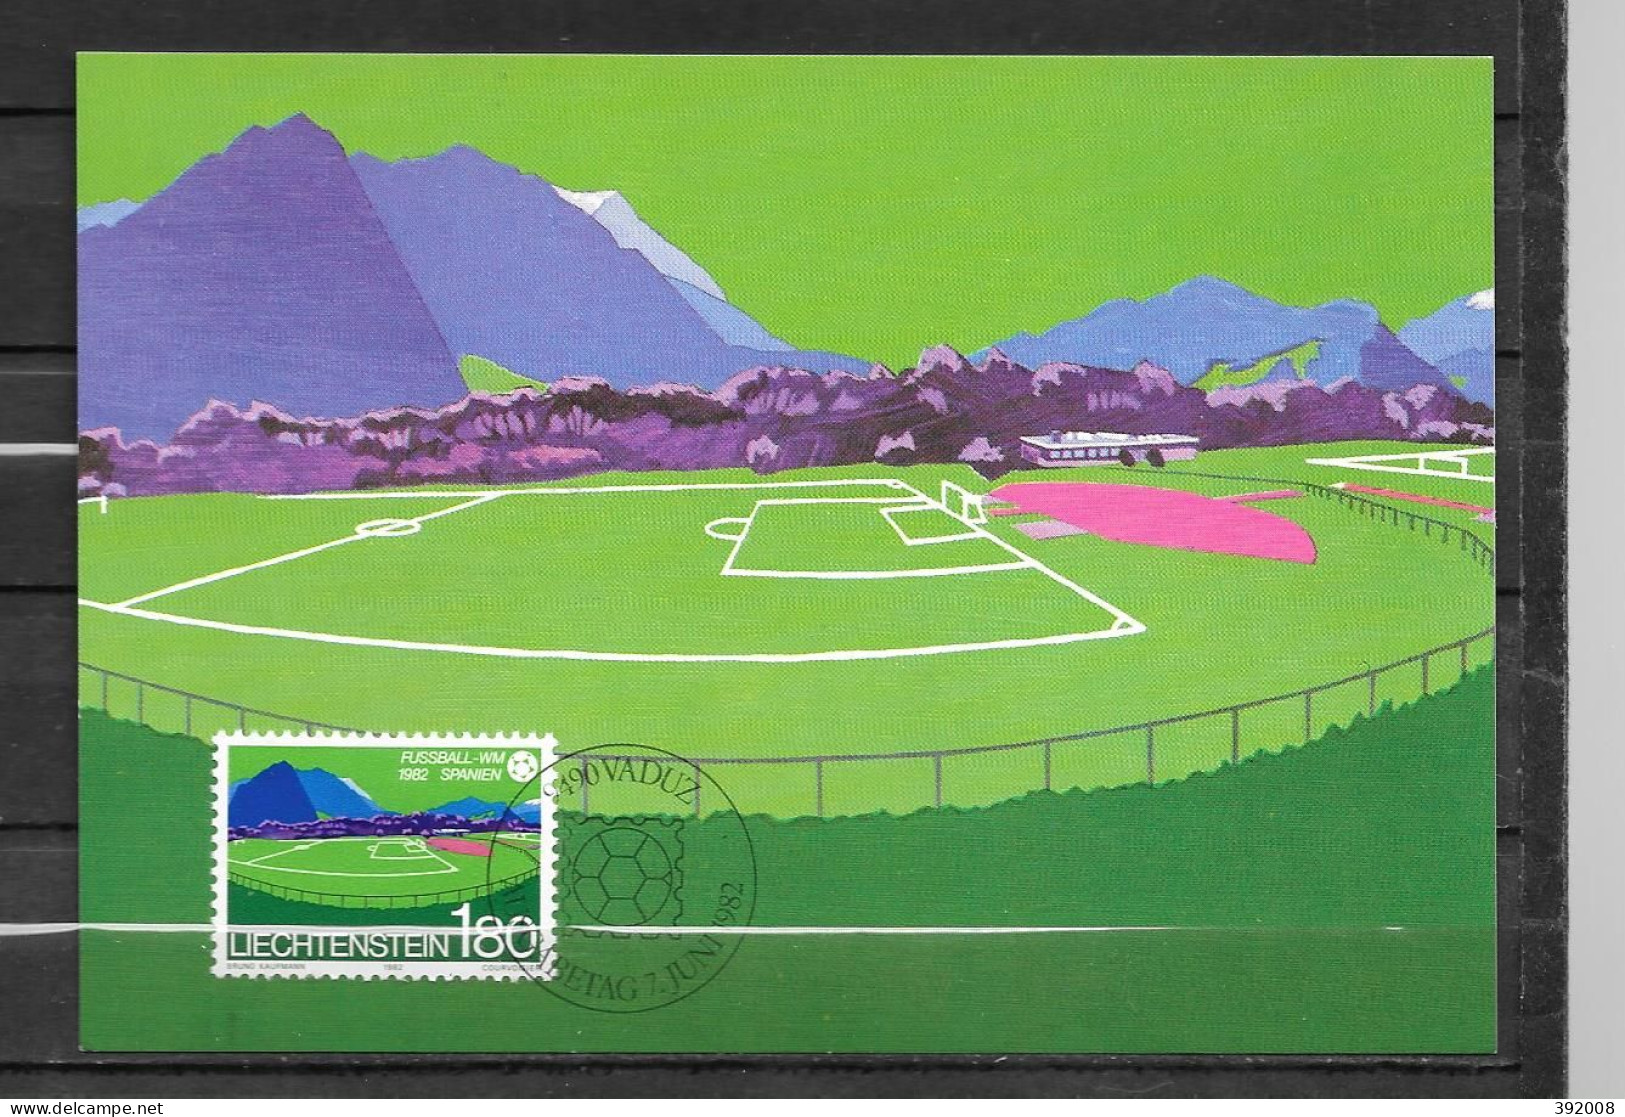 1982 - 742 - Coupe Du Mond De Football En Espagne - 3 - Maximumkaarten